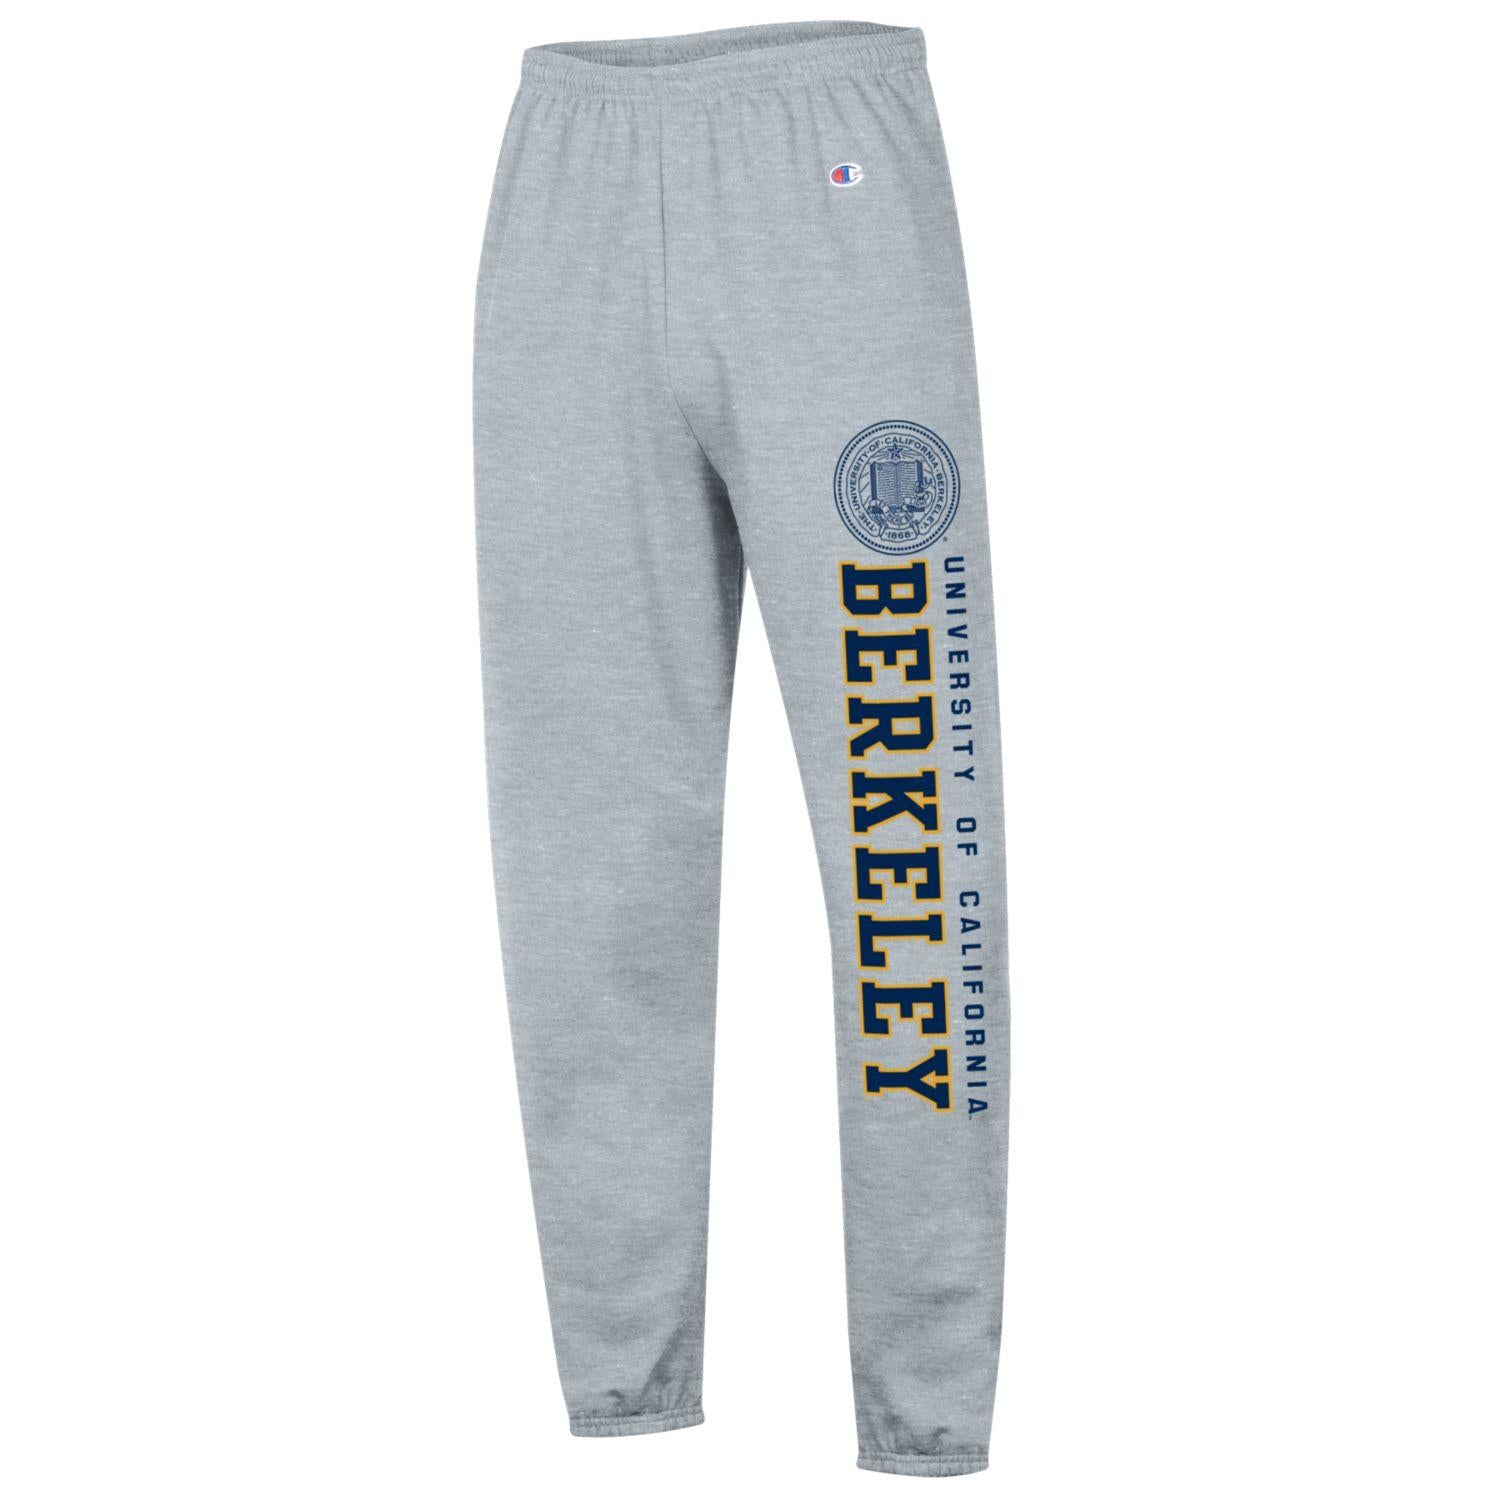 University of California Berkeley and seal Champion men's sweatpants-Grey